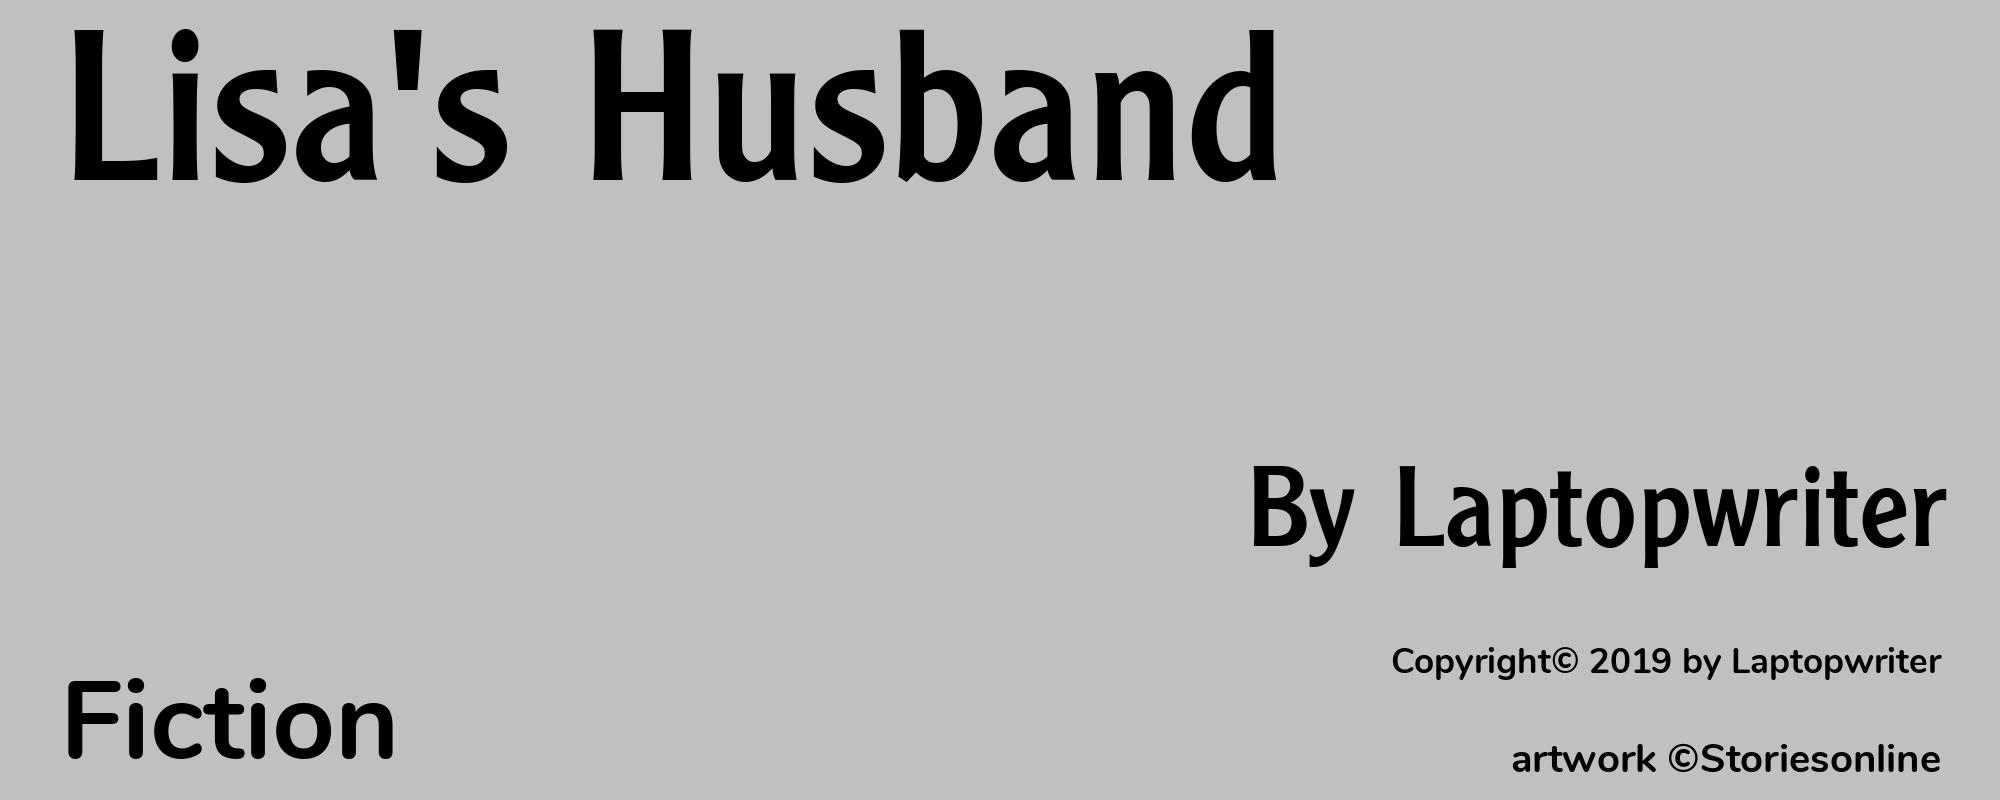 Lisa's Husband - Cover